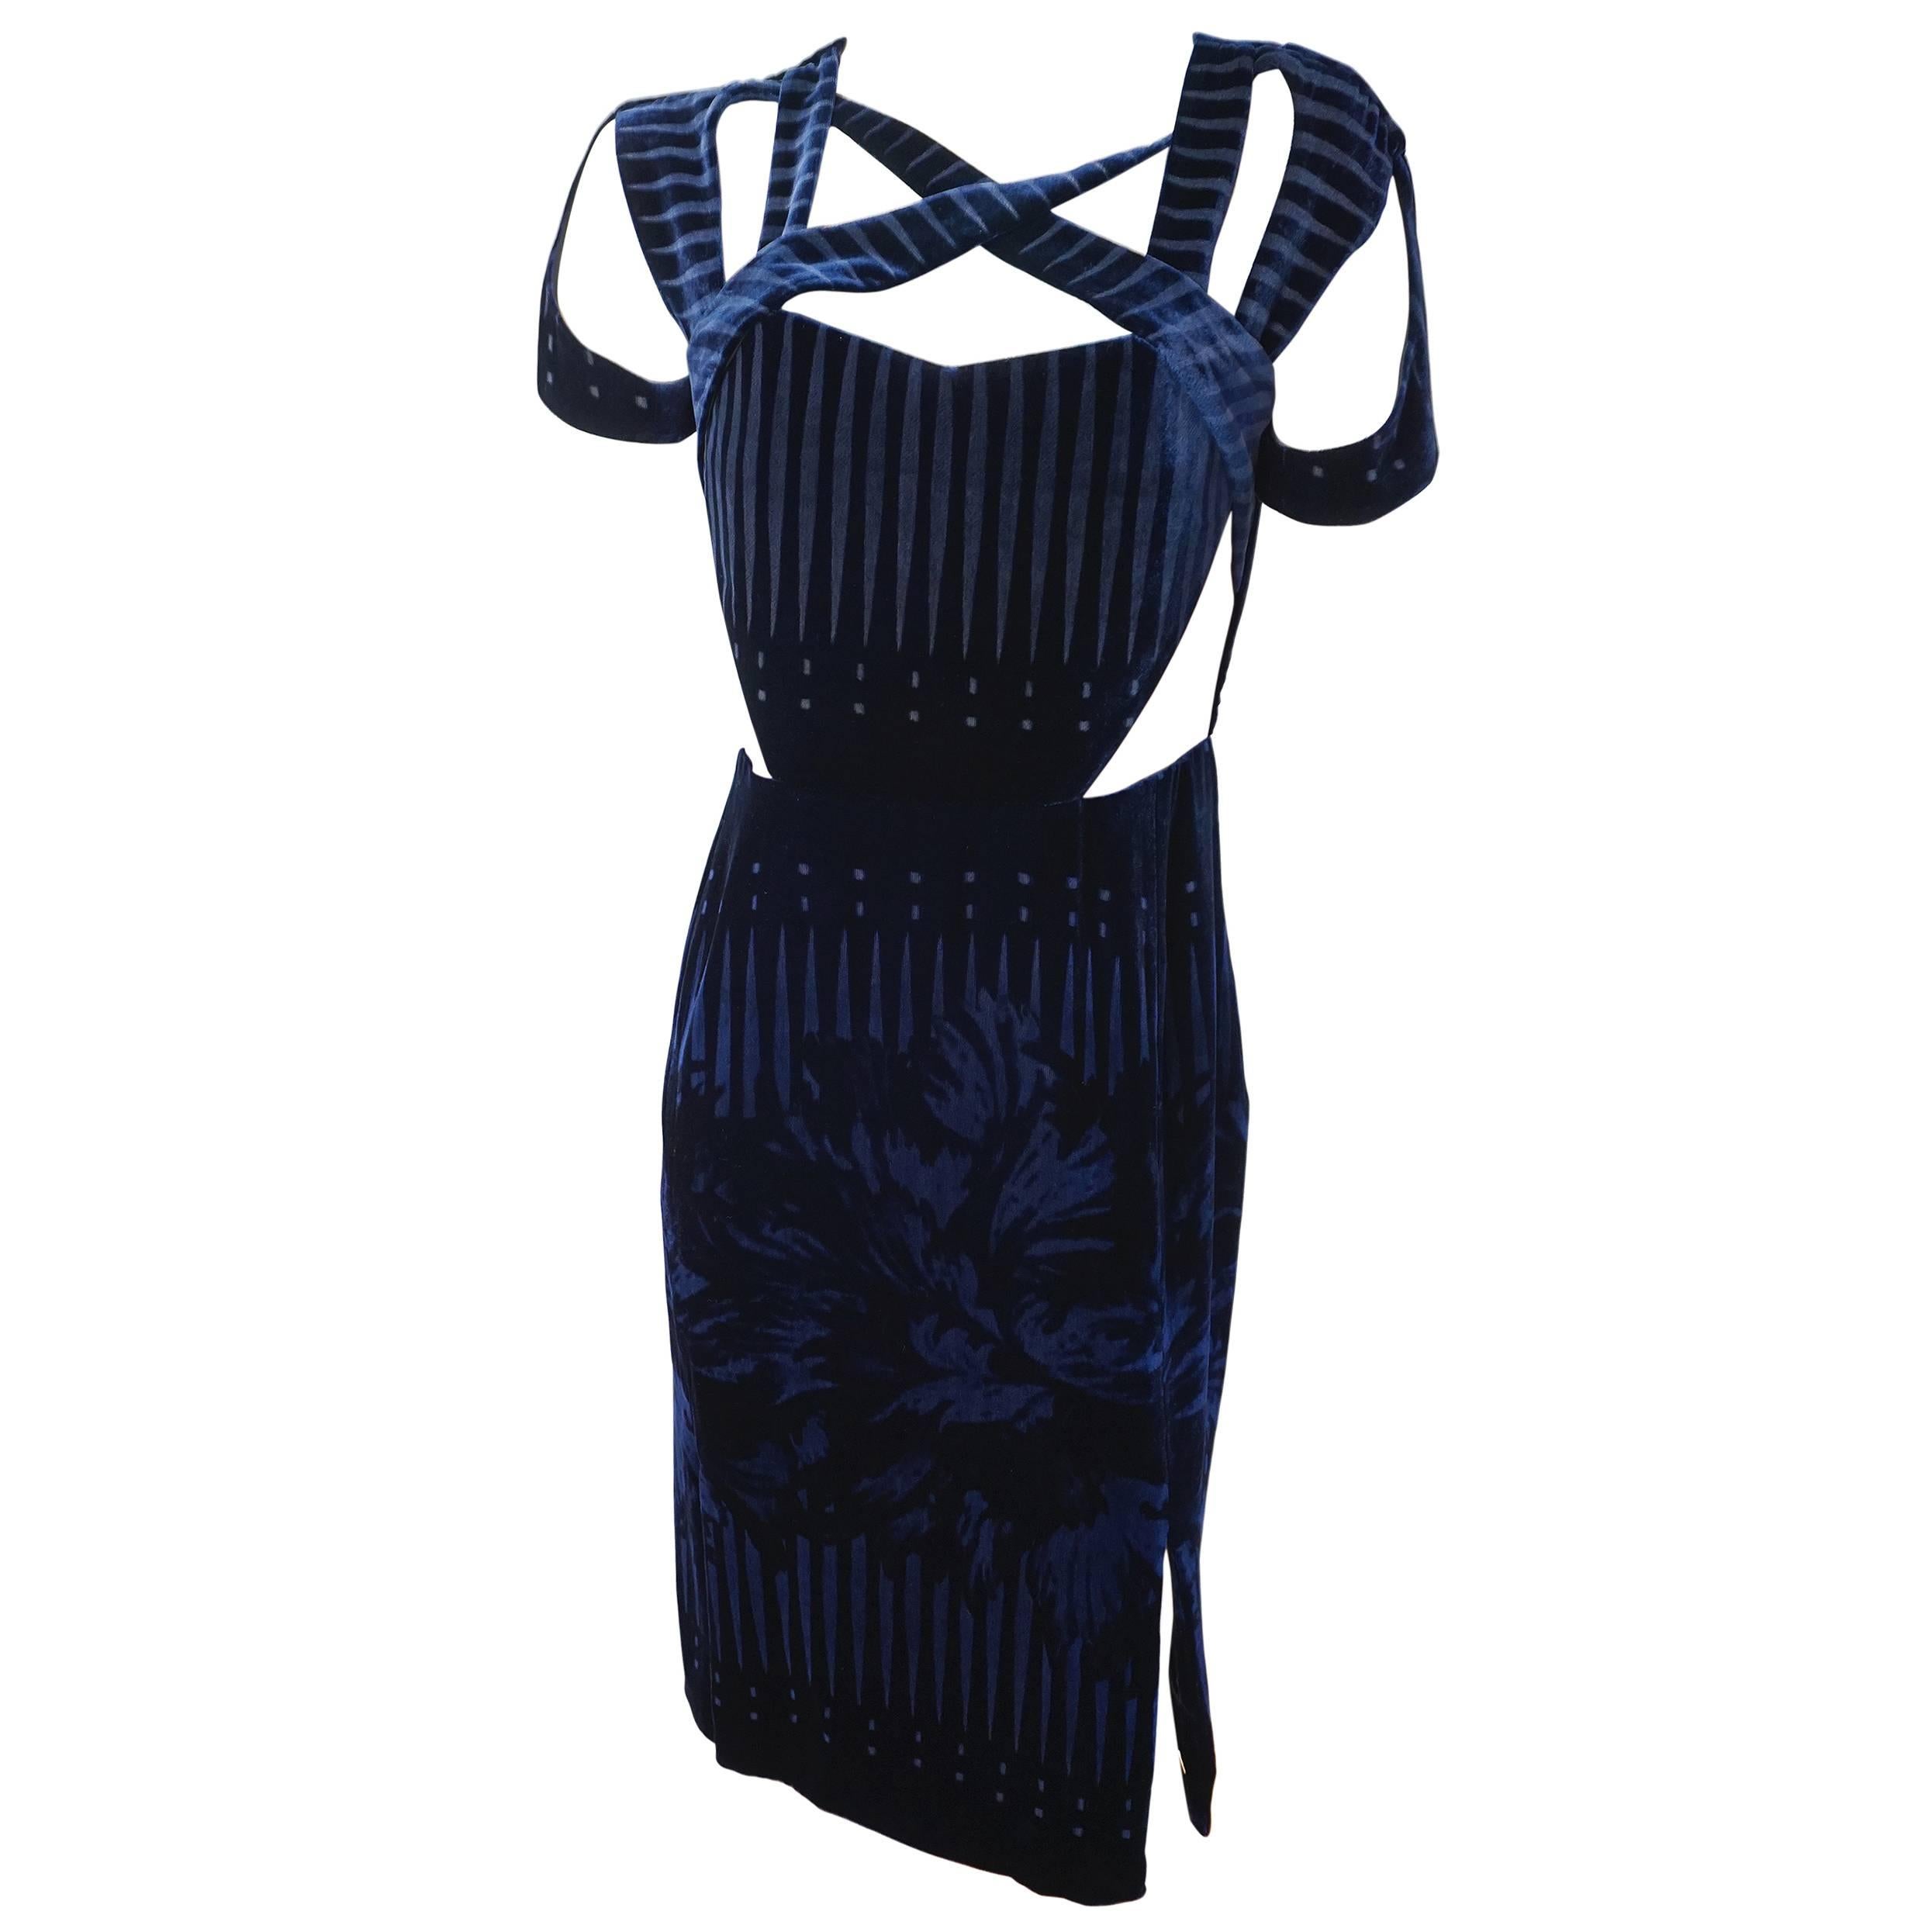 PETER PILOTTO Velvet Corset Dress with Strap Details For Sale